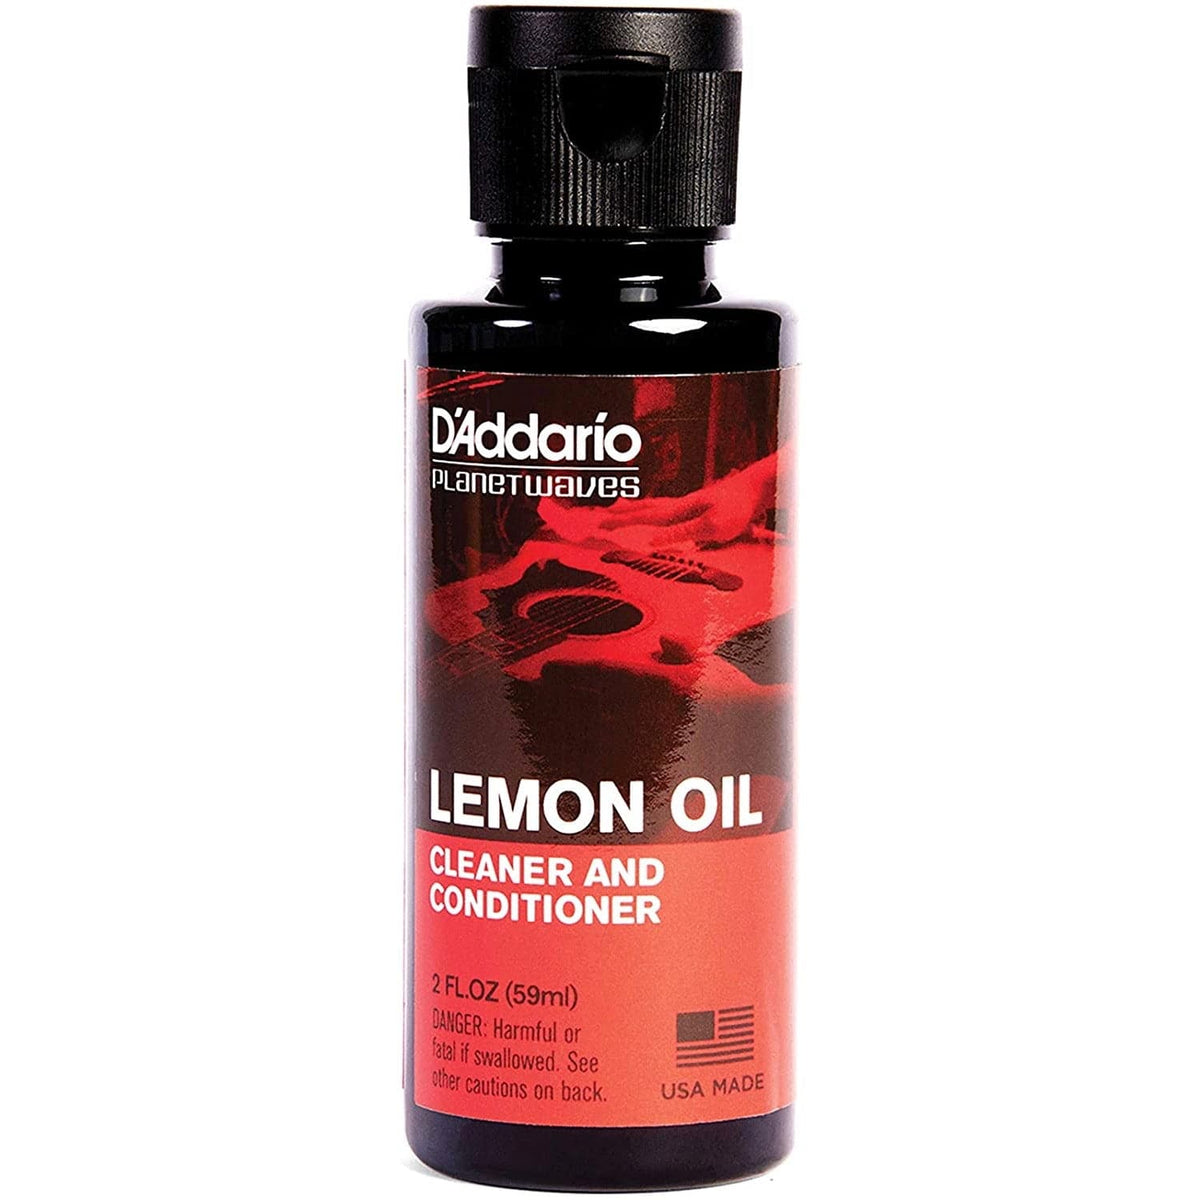 D'Addario Lemon Oil Fretboard Cleaner